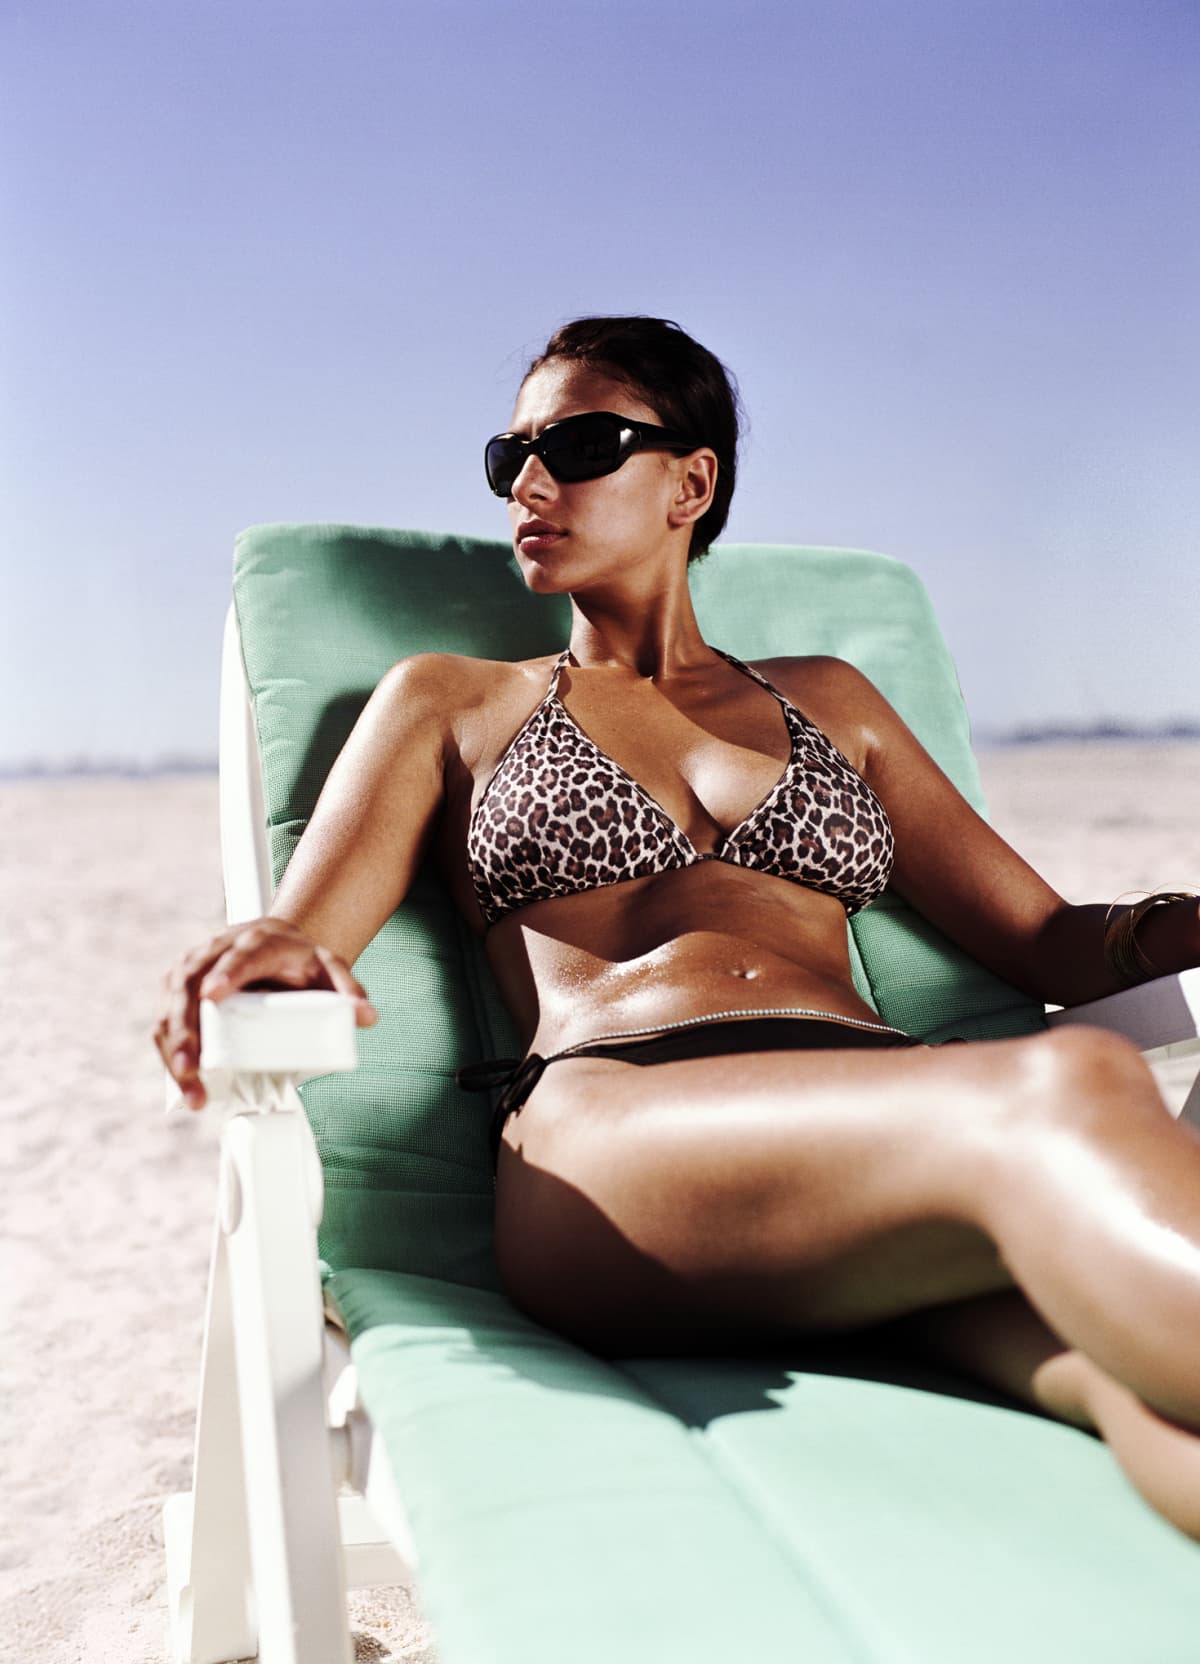 A woman sits in a beach chair in a bikini and sunglasses